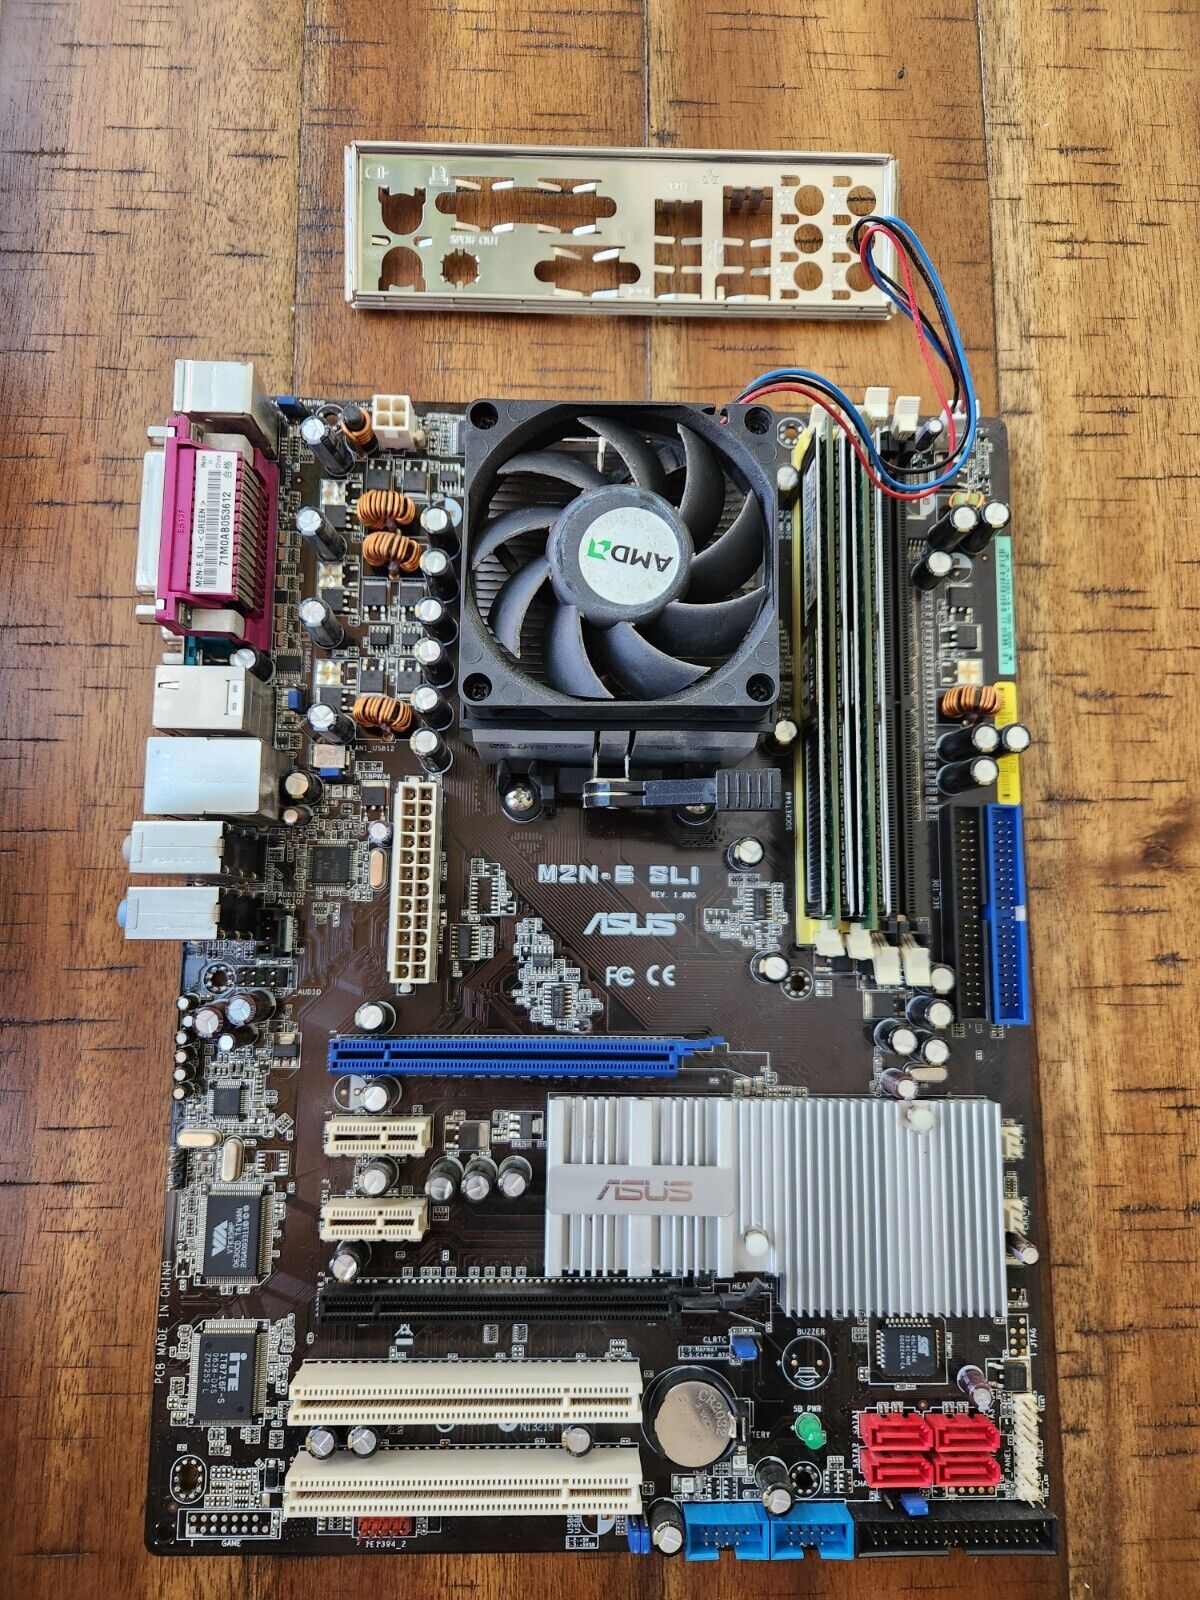 ASUS M2N-E SLI Motherboard Combo (AMD Athlon64 Dual-Core @ 2.2GHz CPU ,4 GB Ram)